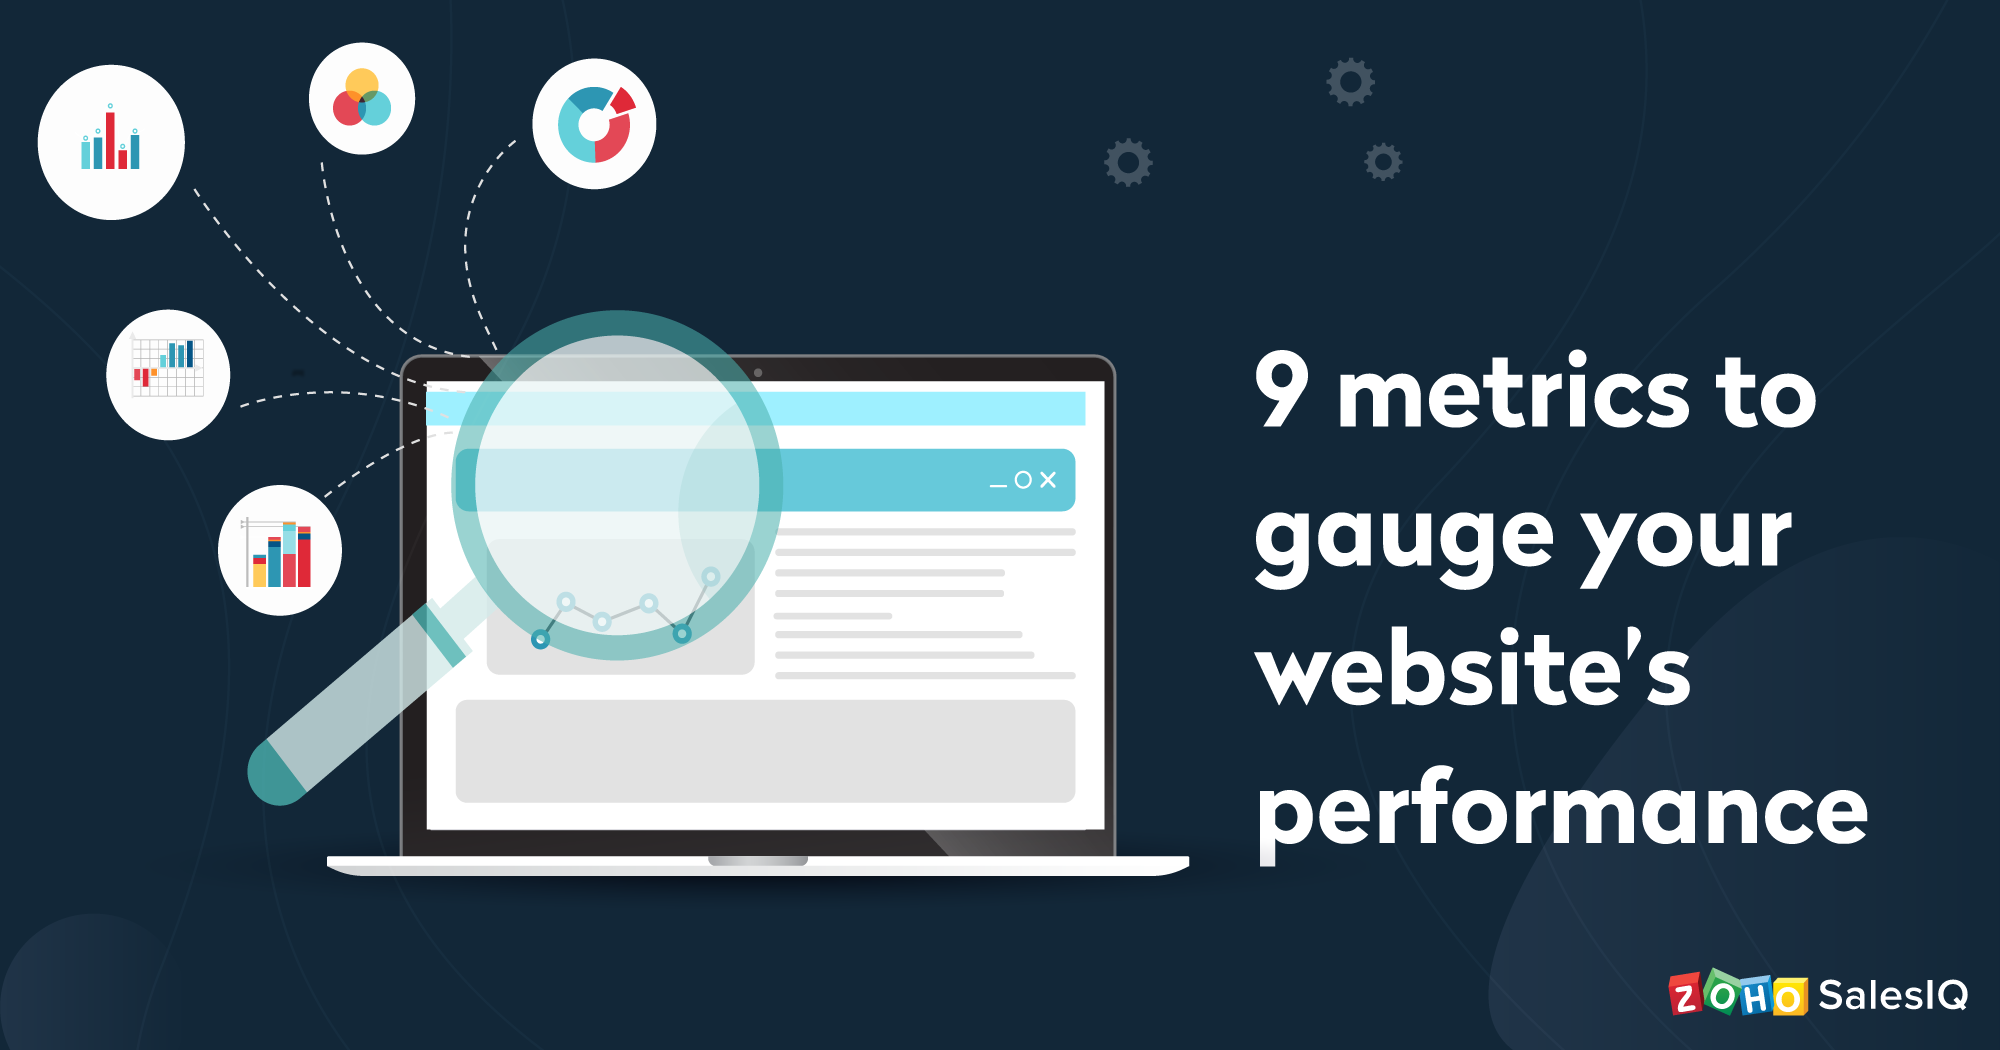 9 fundamental website metrics to gauge your website’s performance